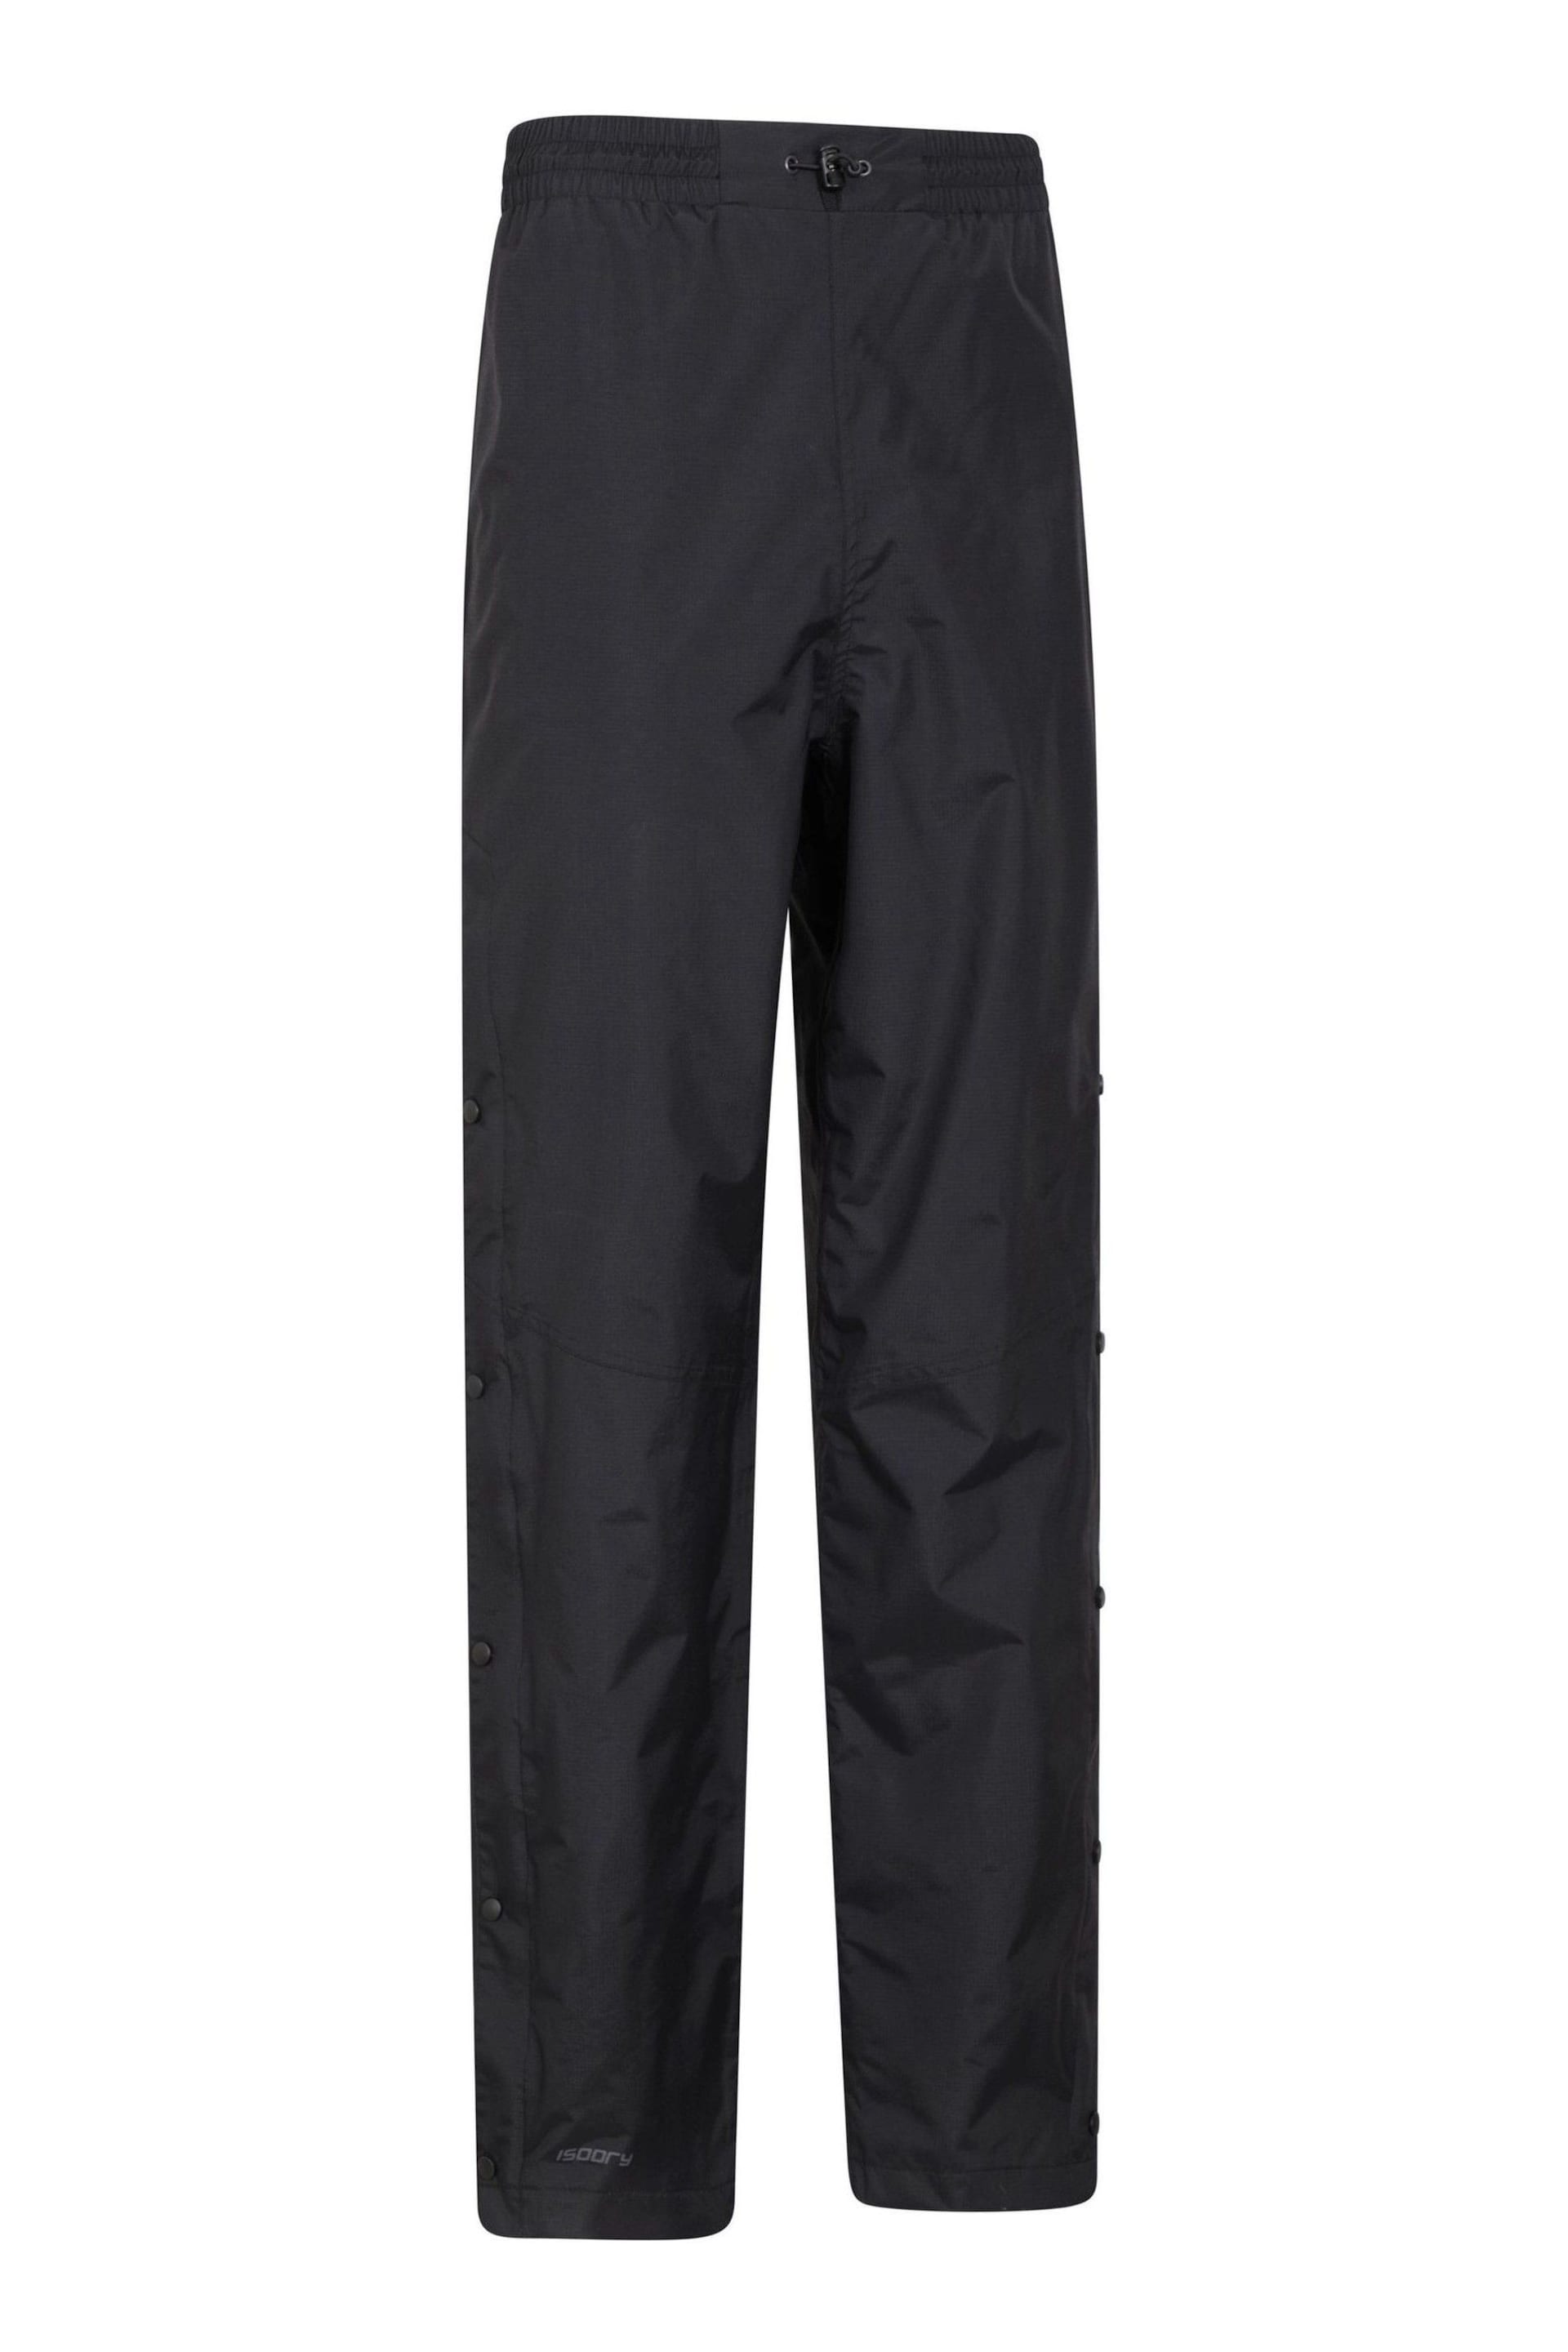 Mountain Warehouse Black Downpour Mens Waterproof Trousers - Short Length - Image 3 of 6